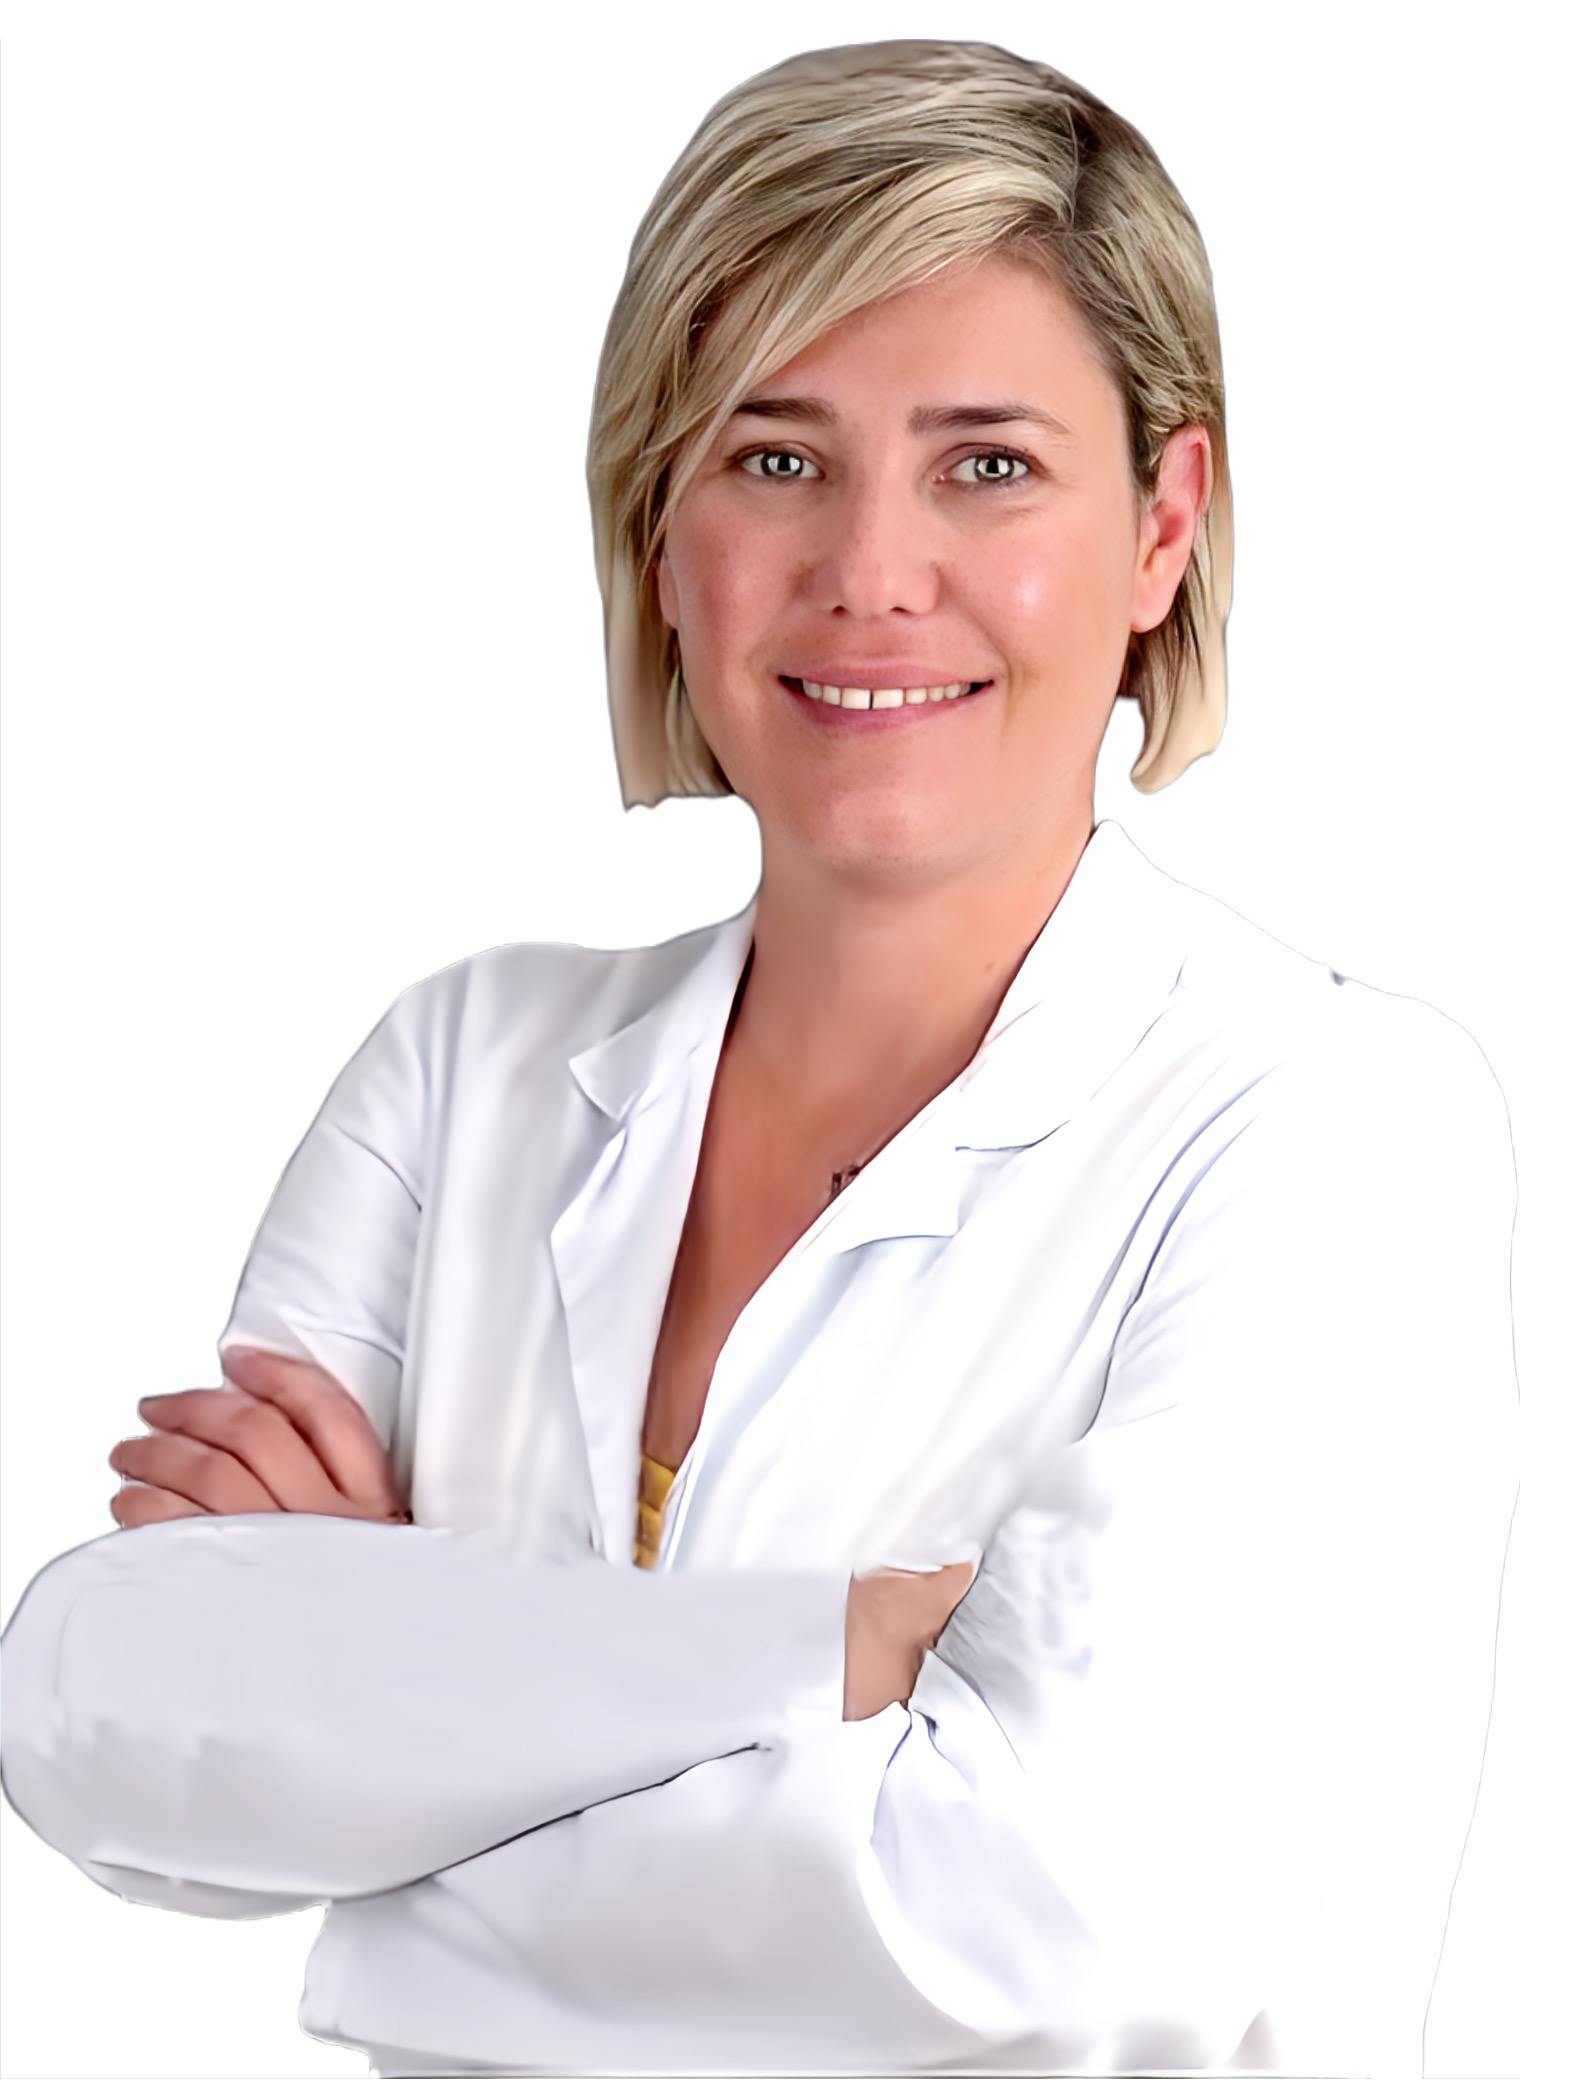 Doctora Vera Espino neurocirujano especialista en columna